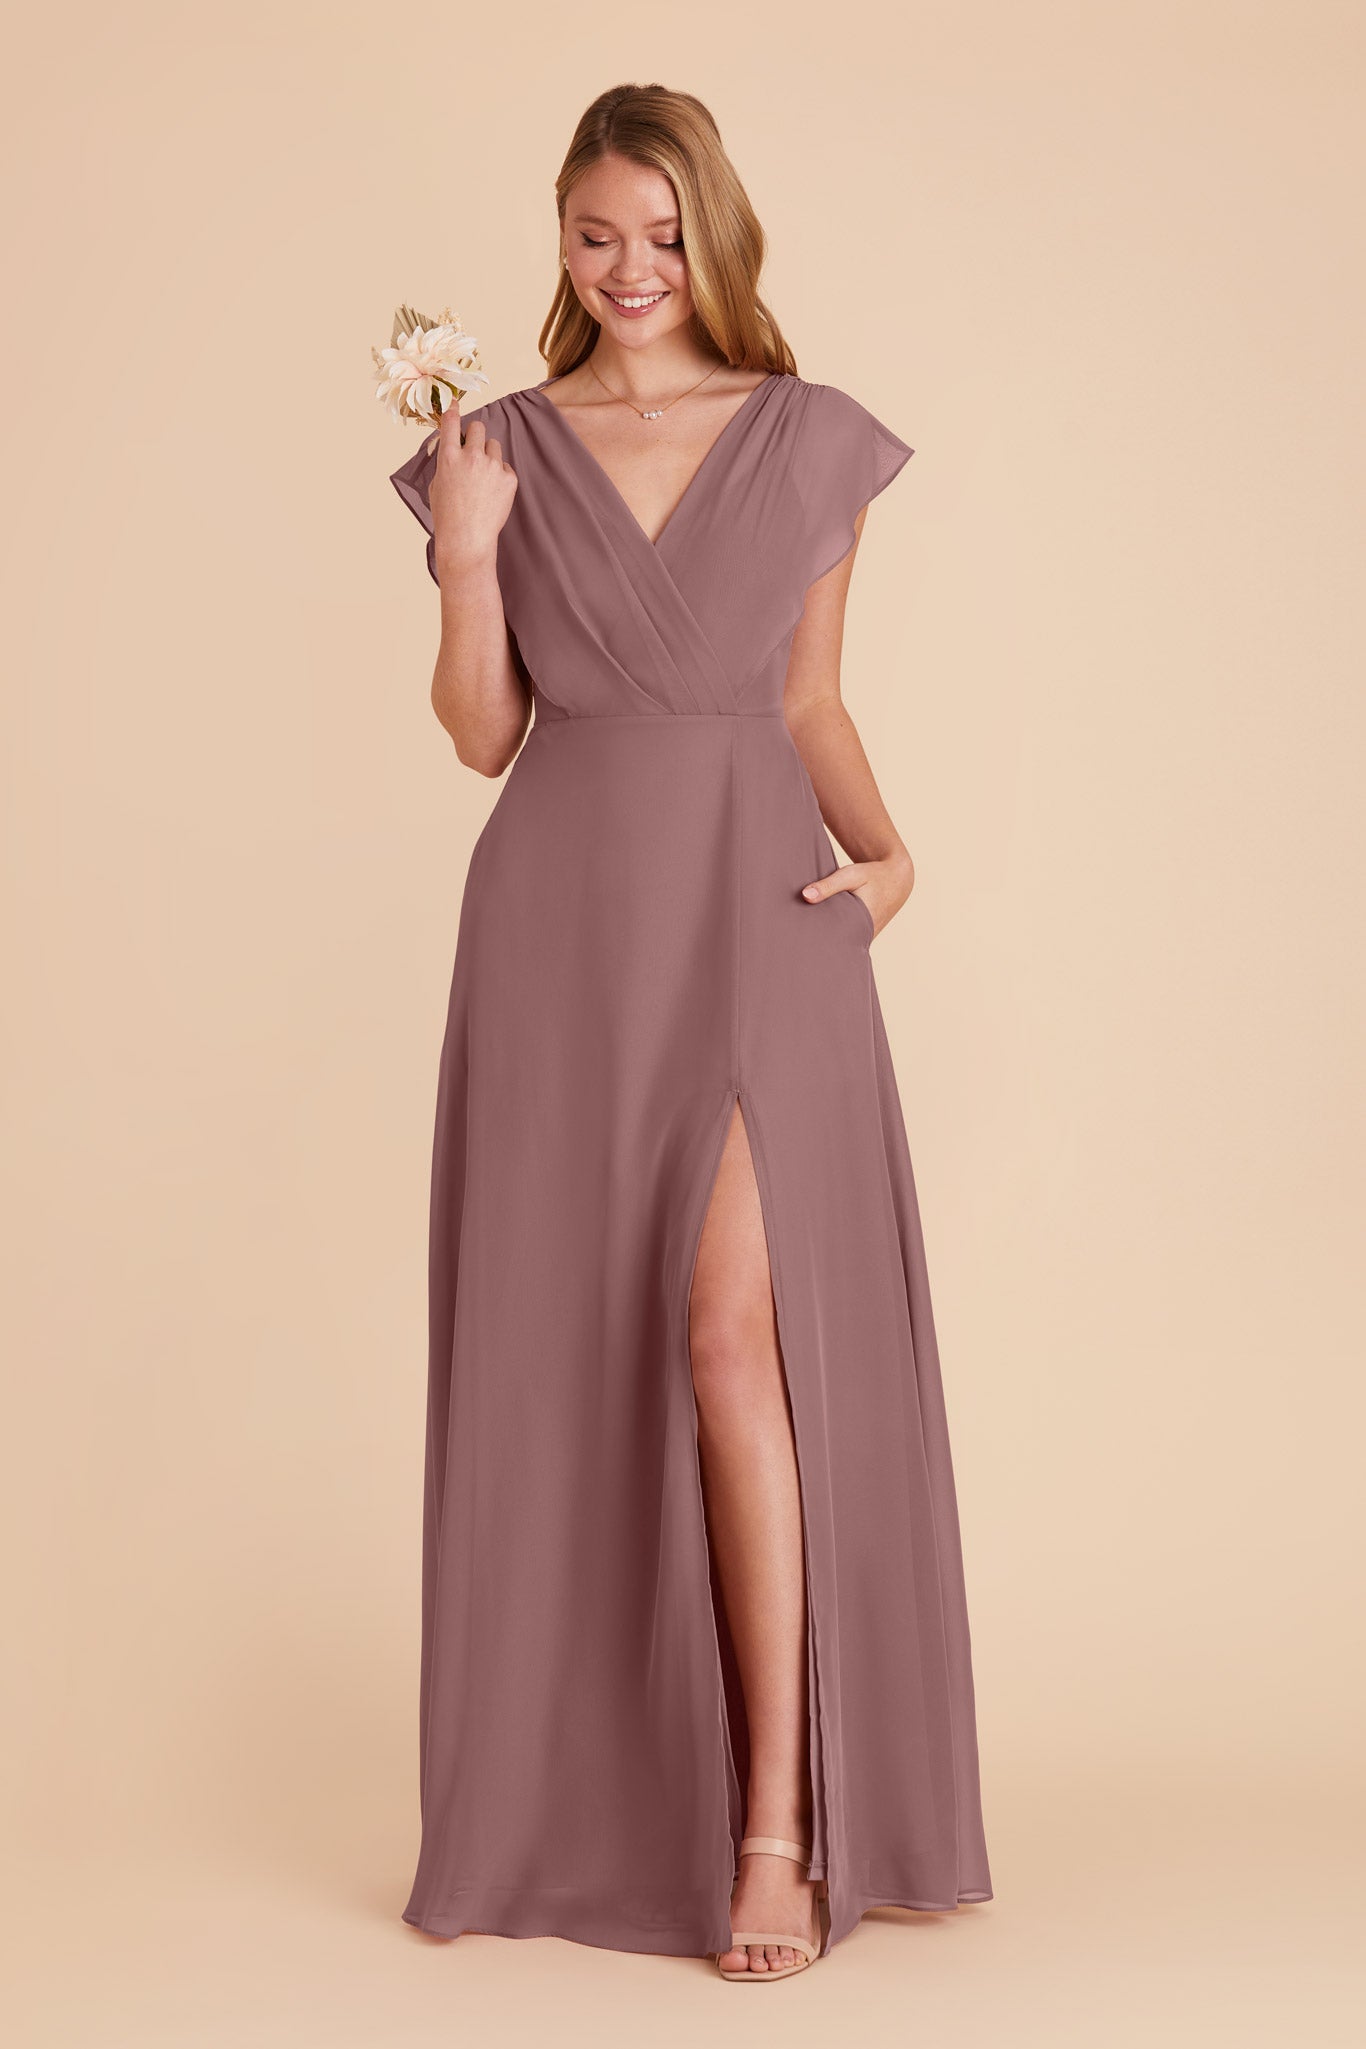 Moody Grey Mauve Purple Bridesmaid Dresses with Birdy Grey